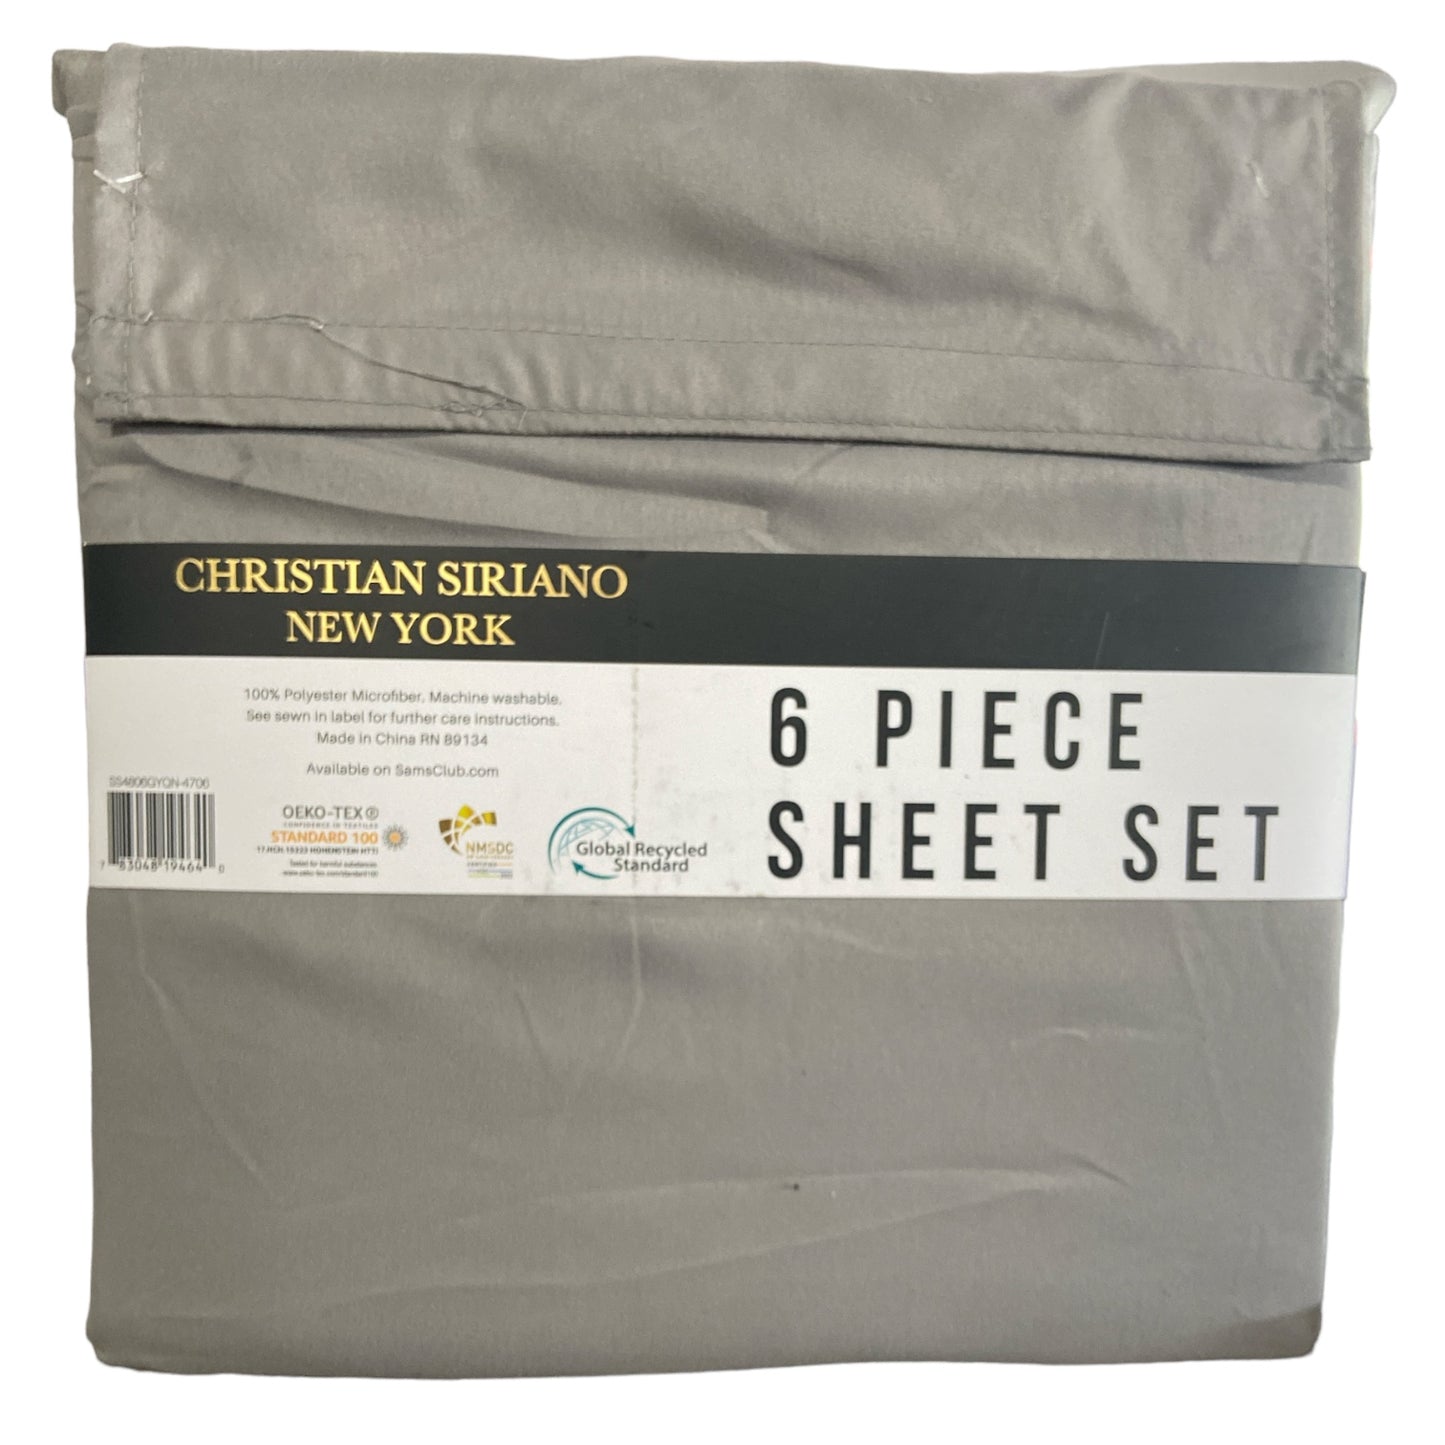 Christian Siriano New York Luxury Microfiber 6 Piece Sheet Set, Queen, Grey